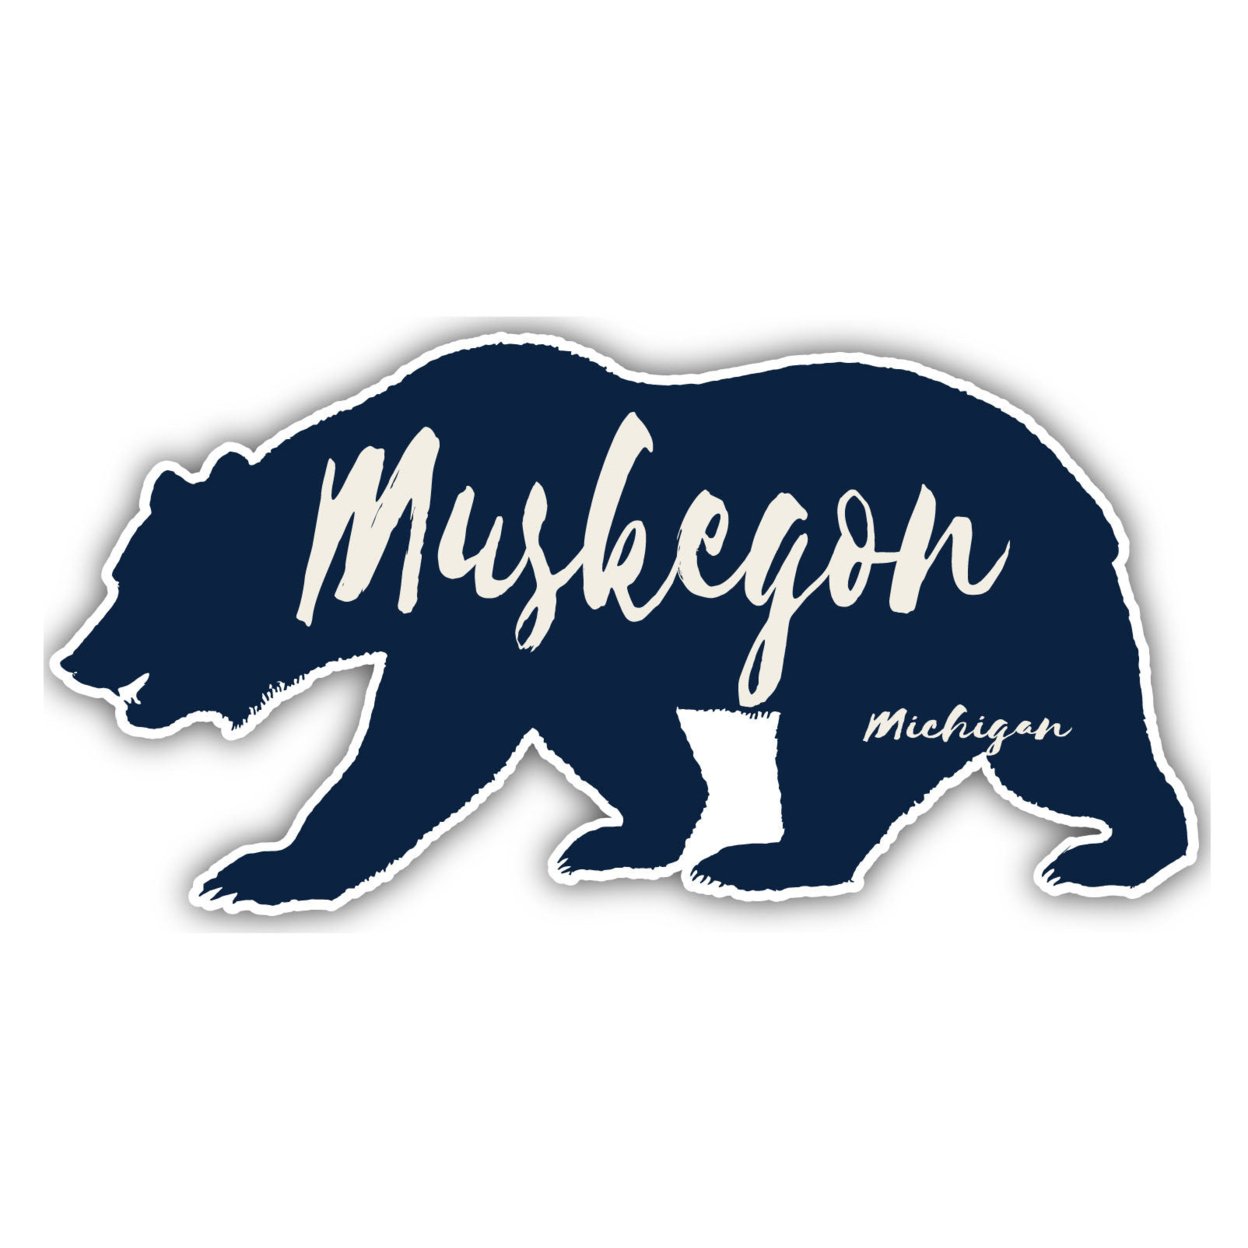 Muskegon Michigan Souvenir Decorative Stickers (Choose Theme And Size) - Single Unit, 4-Inch, Bear